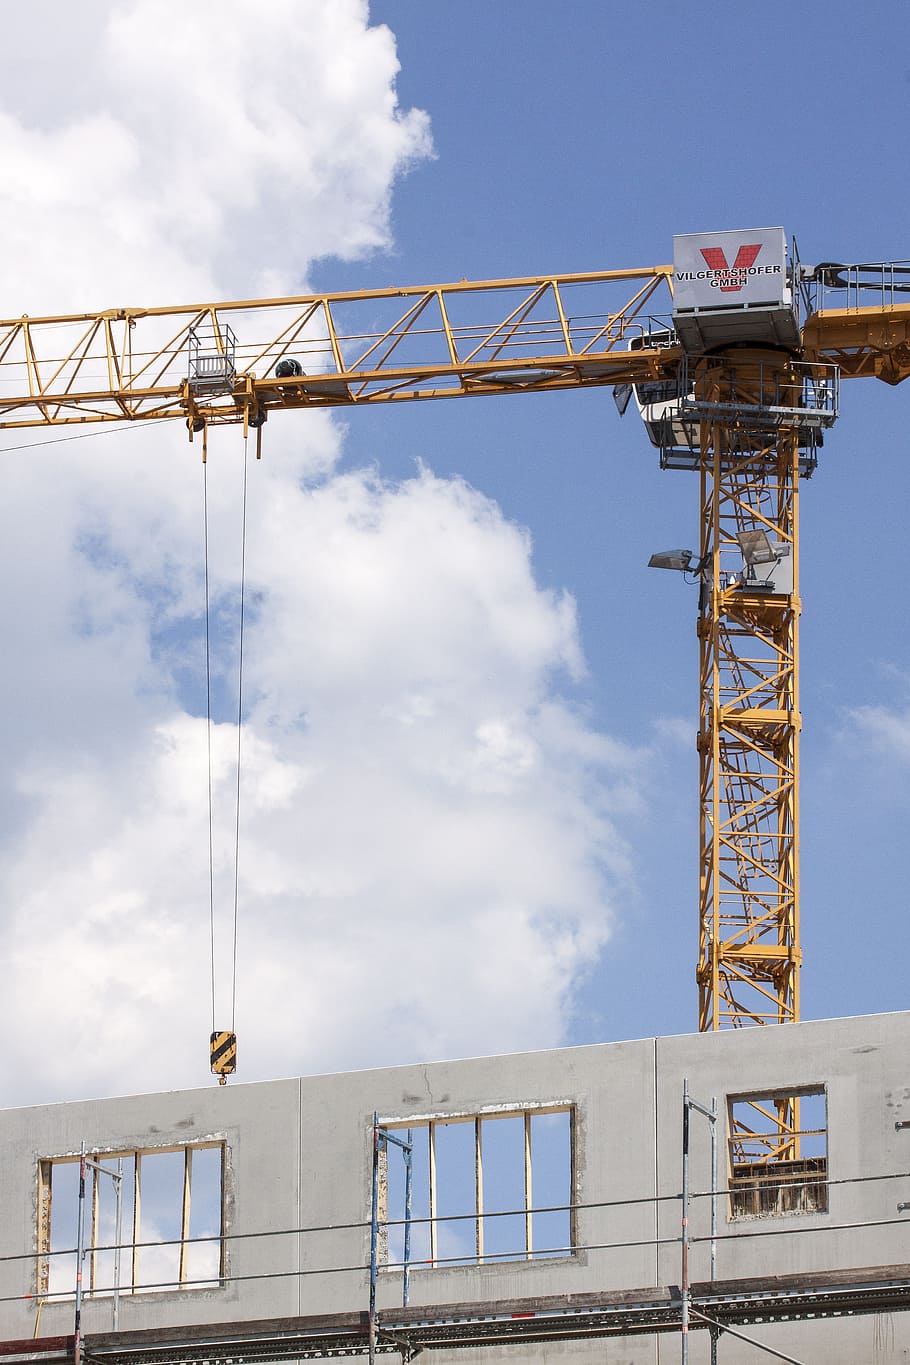 baukran, crane, build, site, sky, construction work, lattice boom crane, crane boom, boom, residential construction